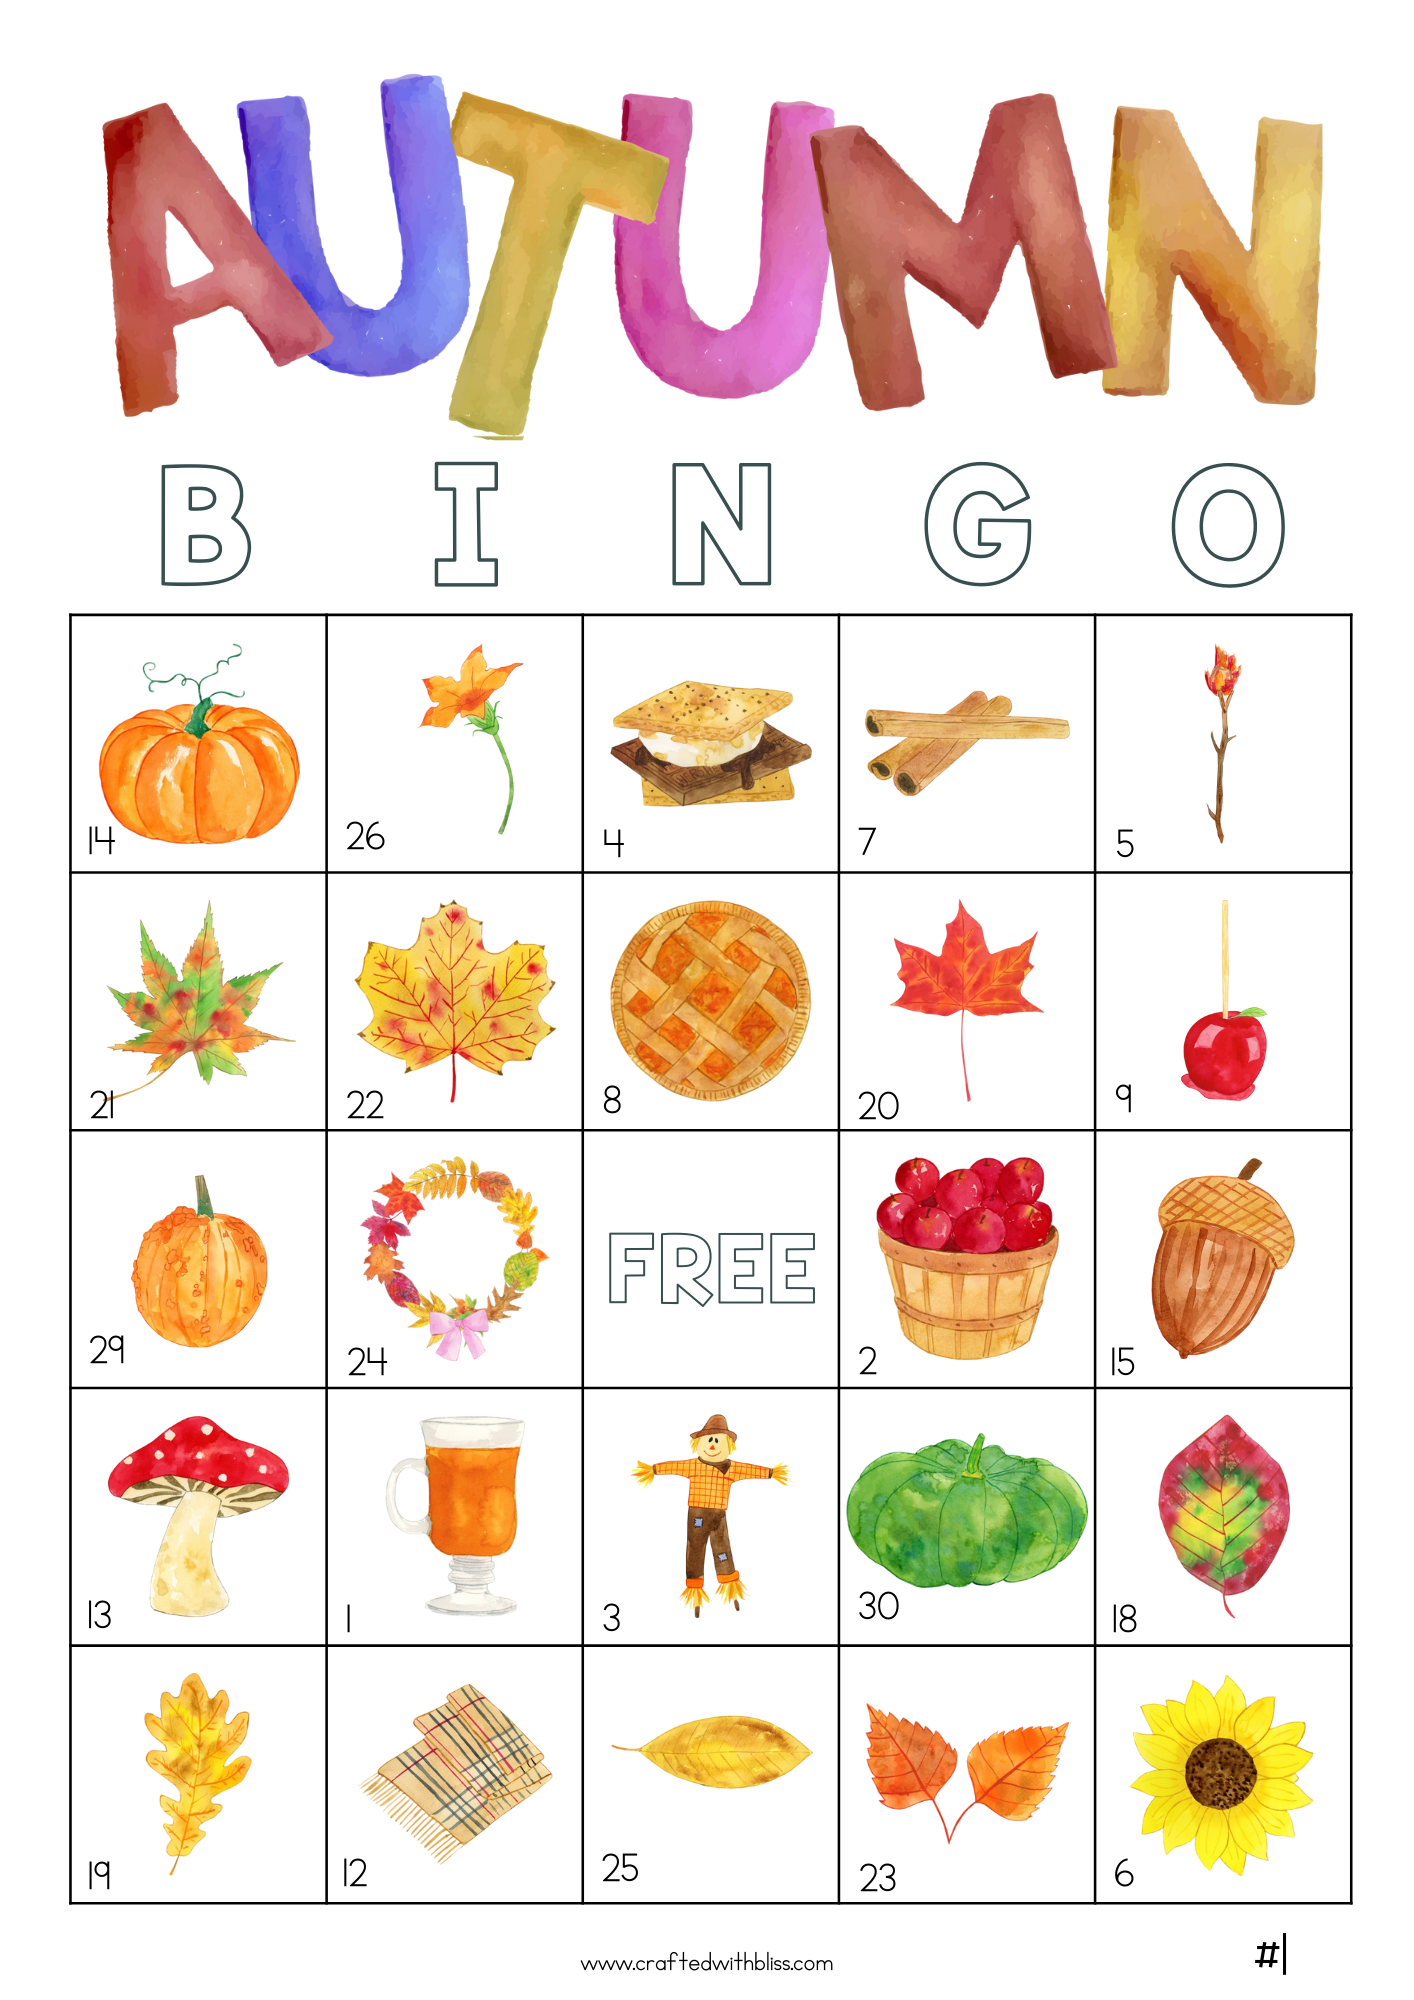 50 Autumn Bingo Cards (5x5)